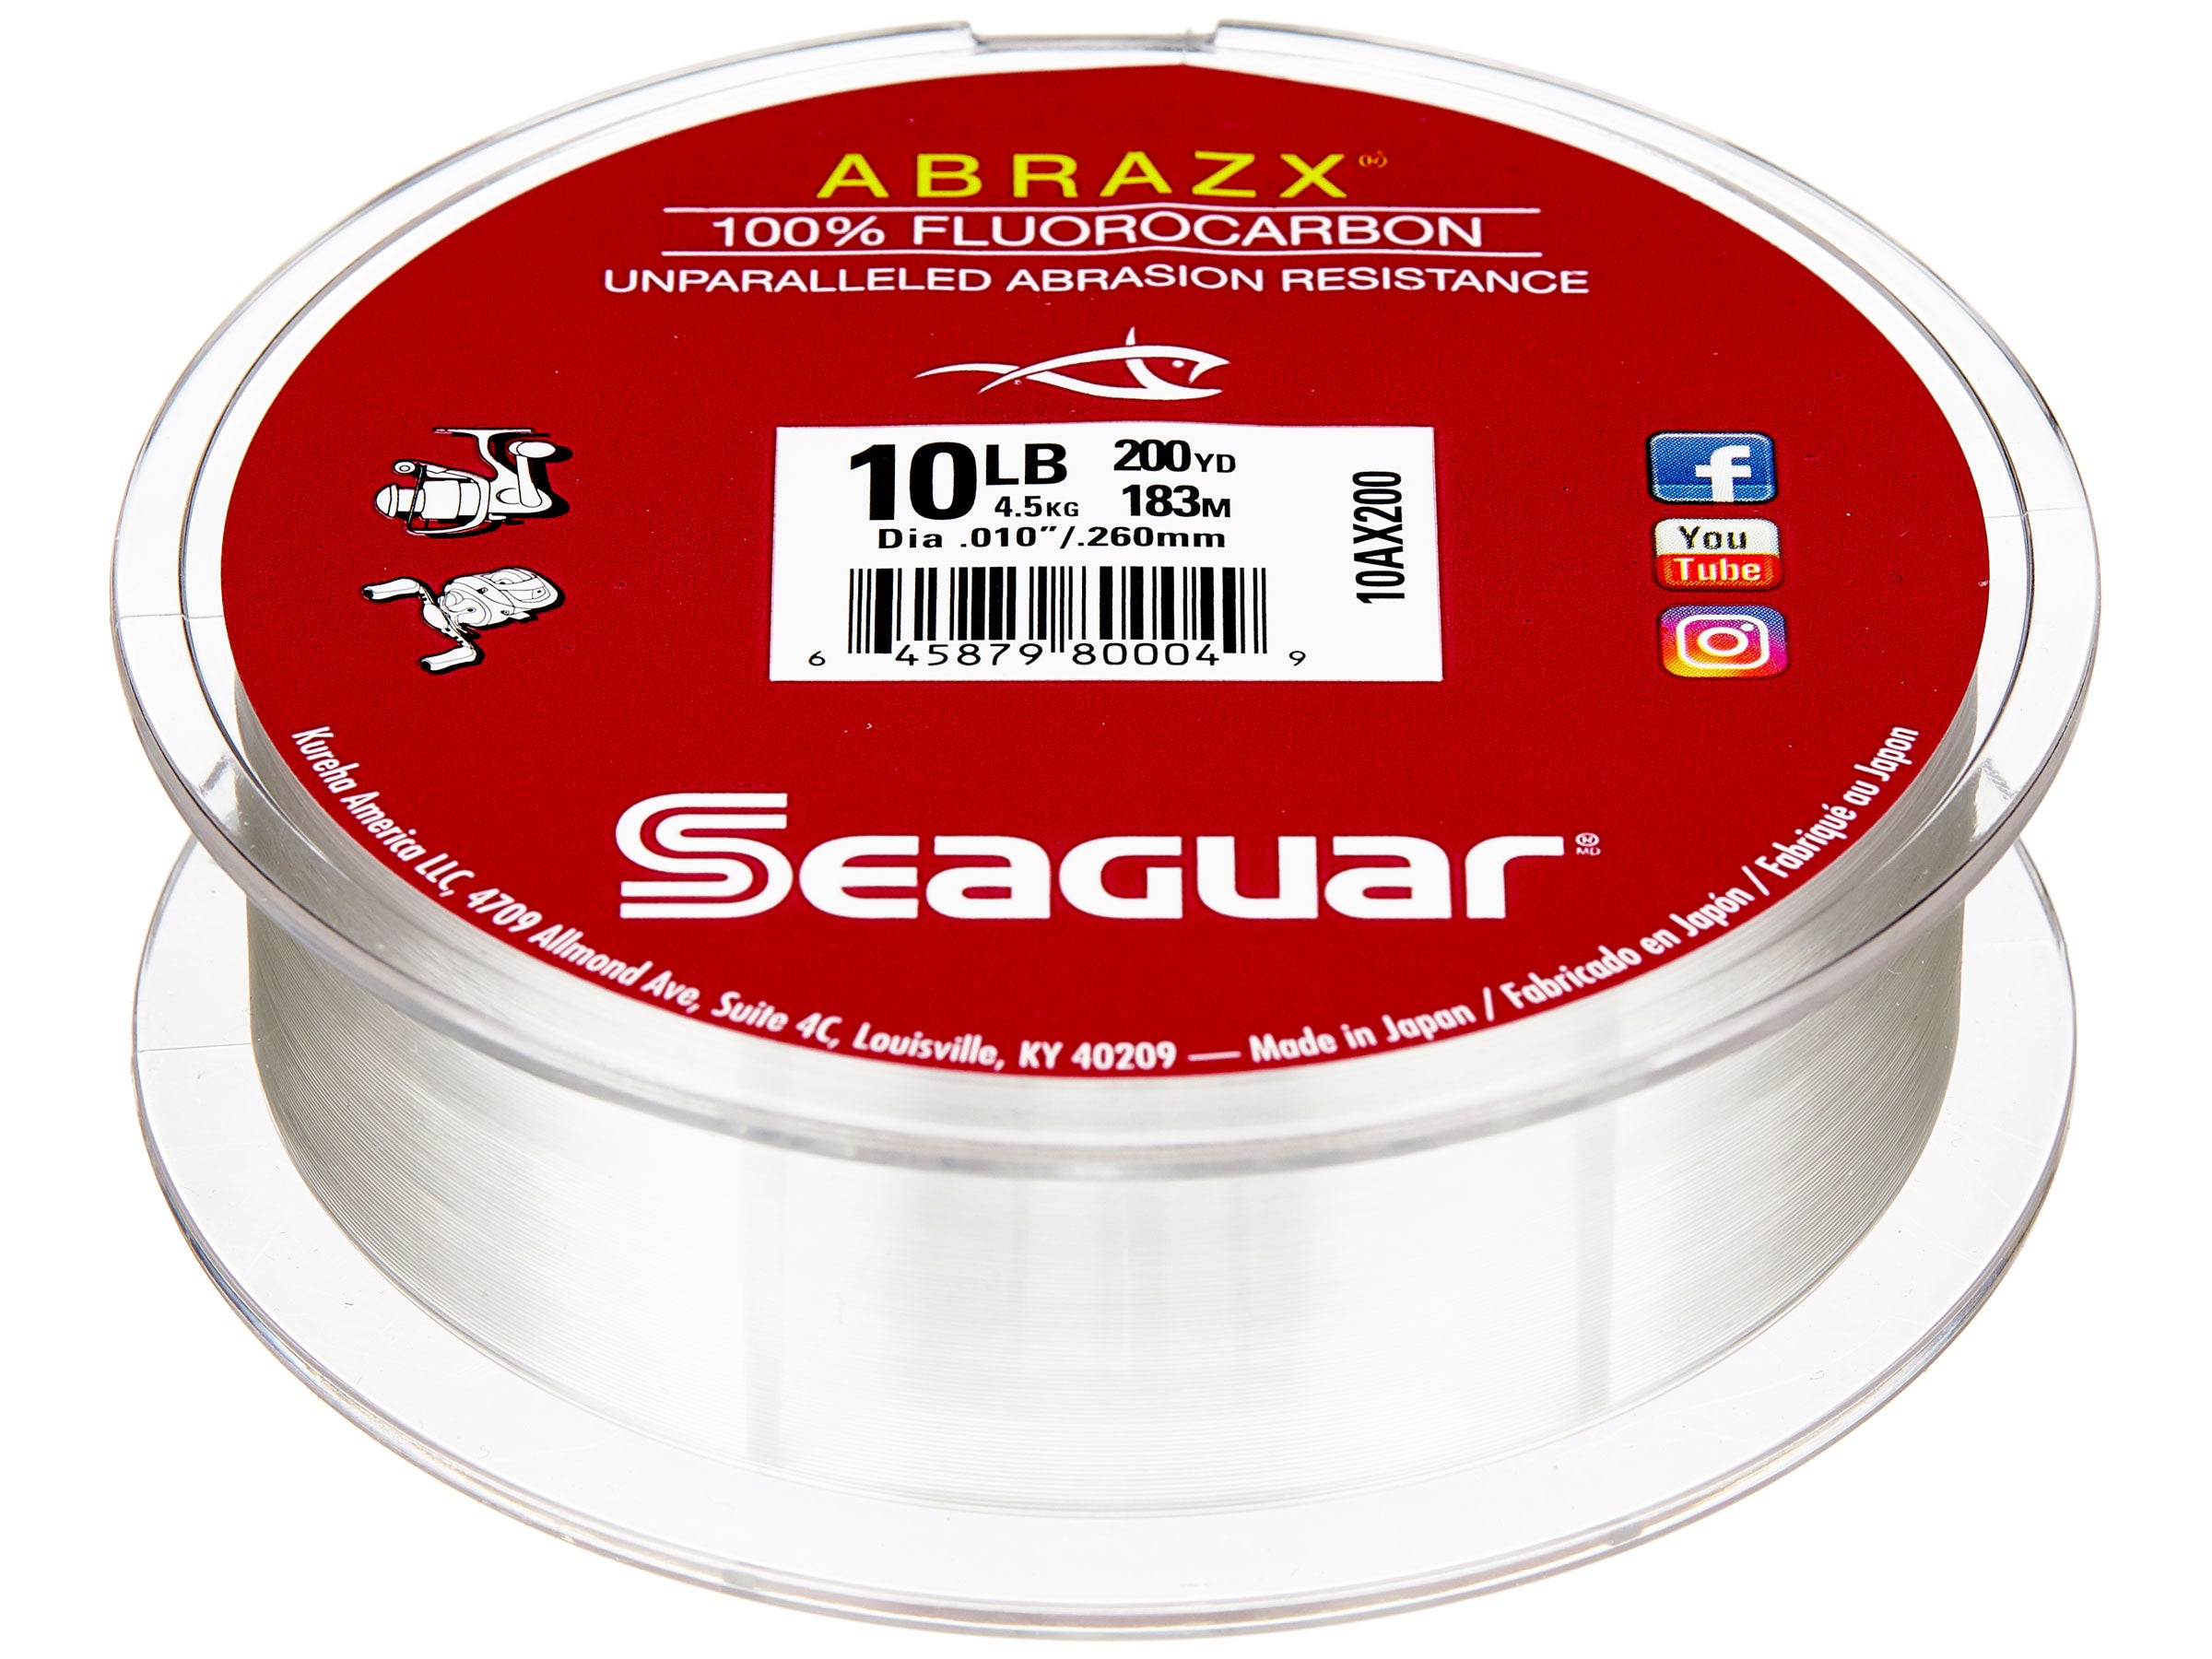 Seaguar Abrazx 100% Fluoro Fishing Line 1000 yd 20 lb 20AX1000 